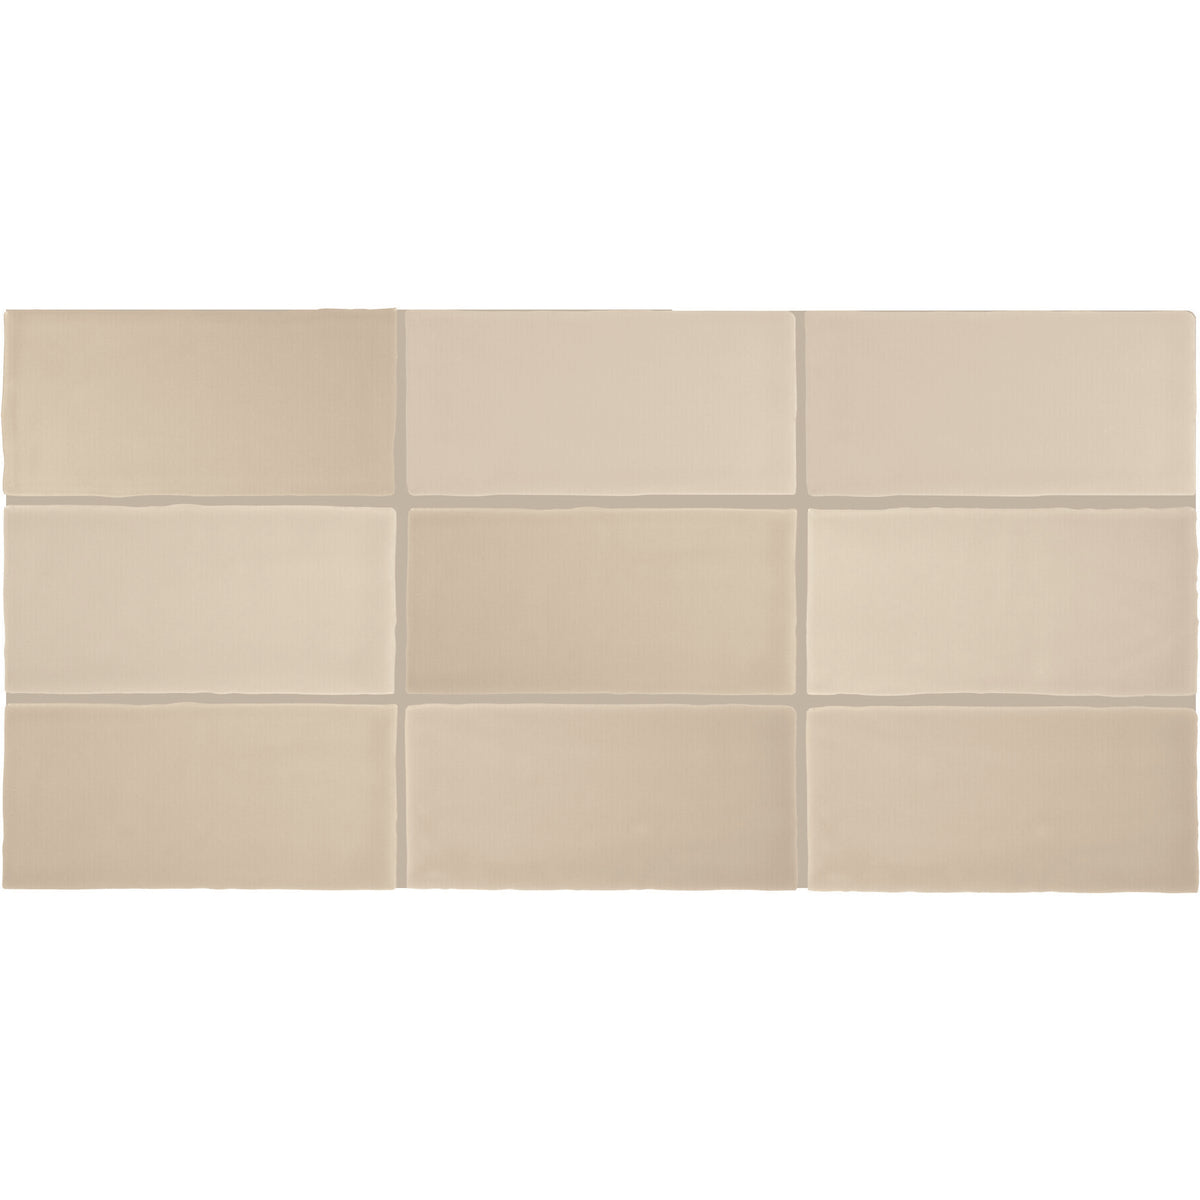 Daltile - Farrier - 2.5 in. x 5 in. Glazed Ceramic Wall Tile - Palomino Variation View